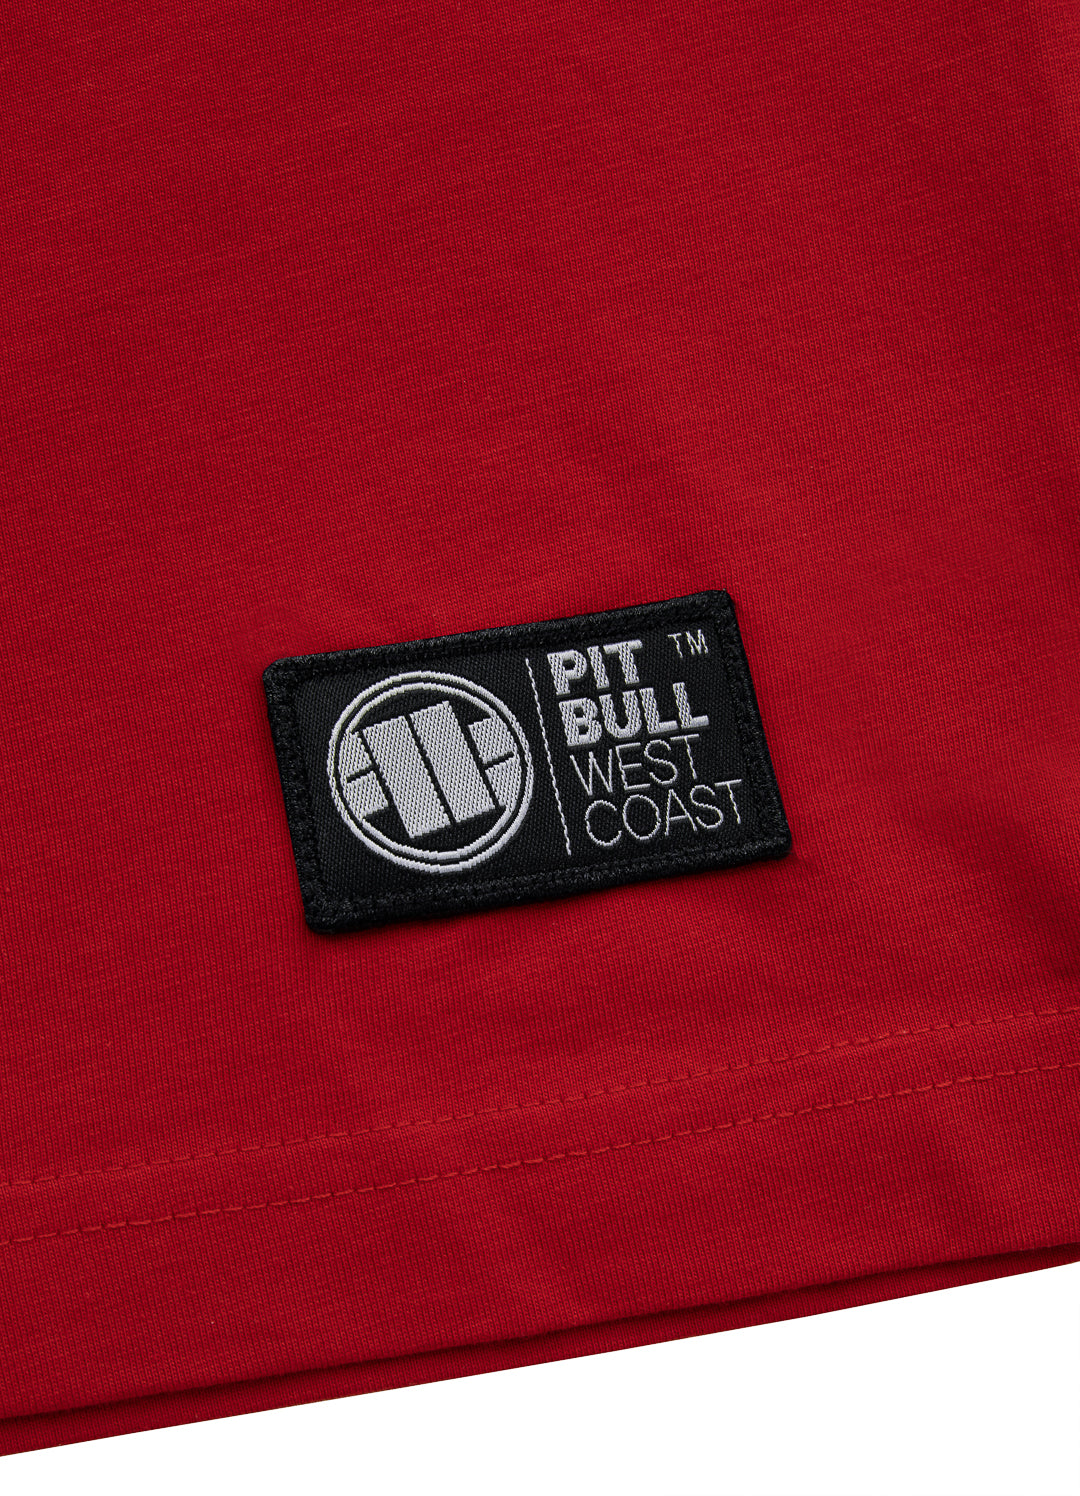 Women's T-shirt BOXING Red - Pitbull West Coast International Store 